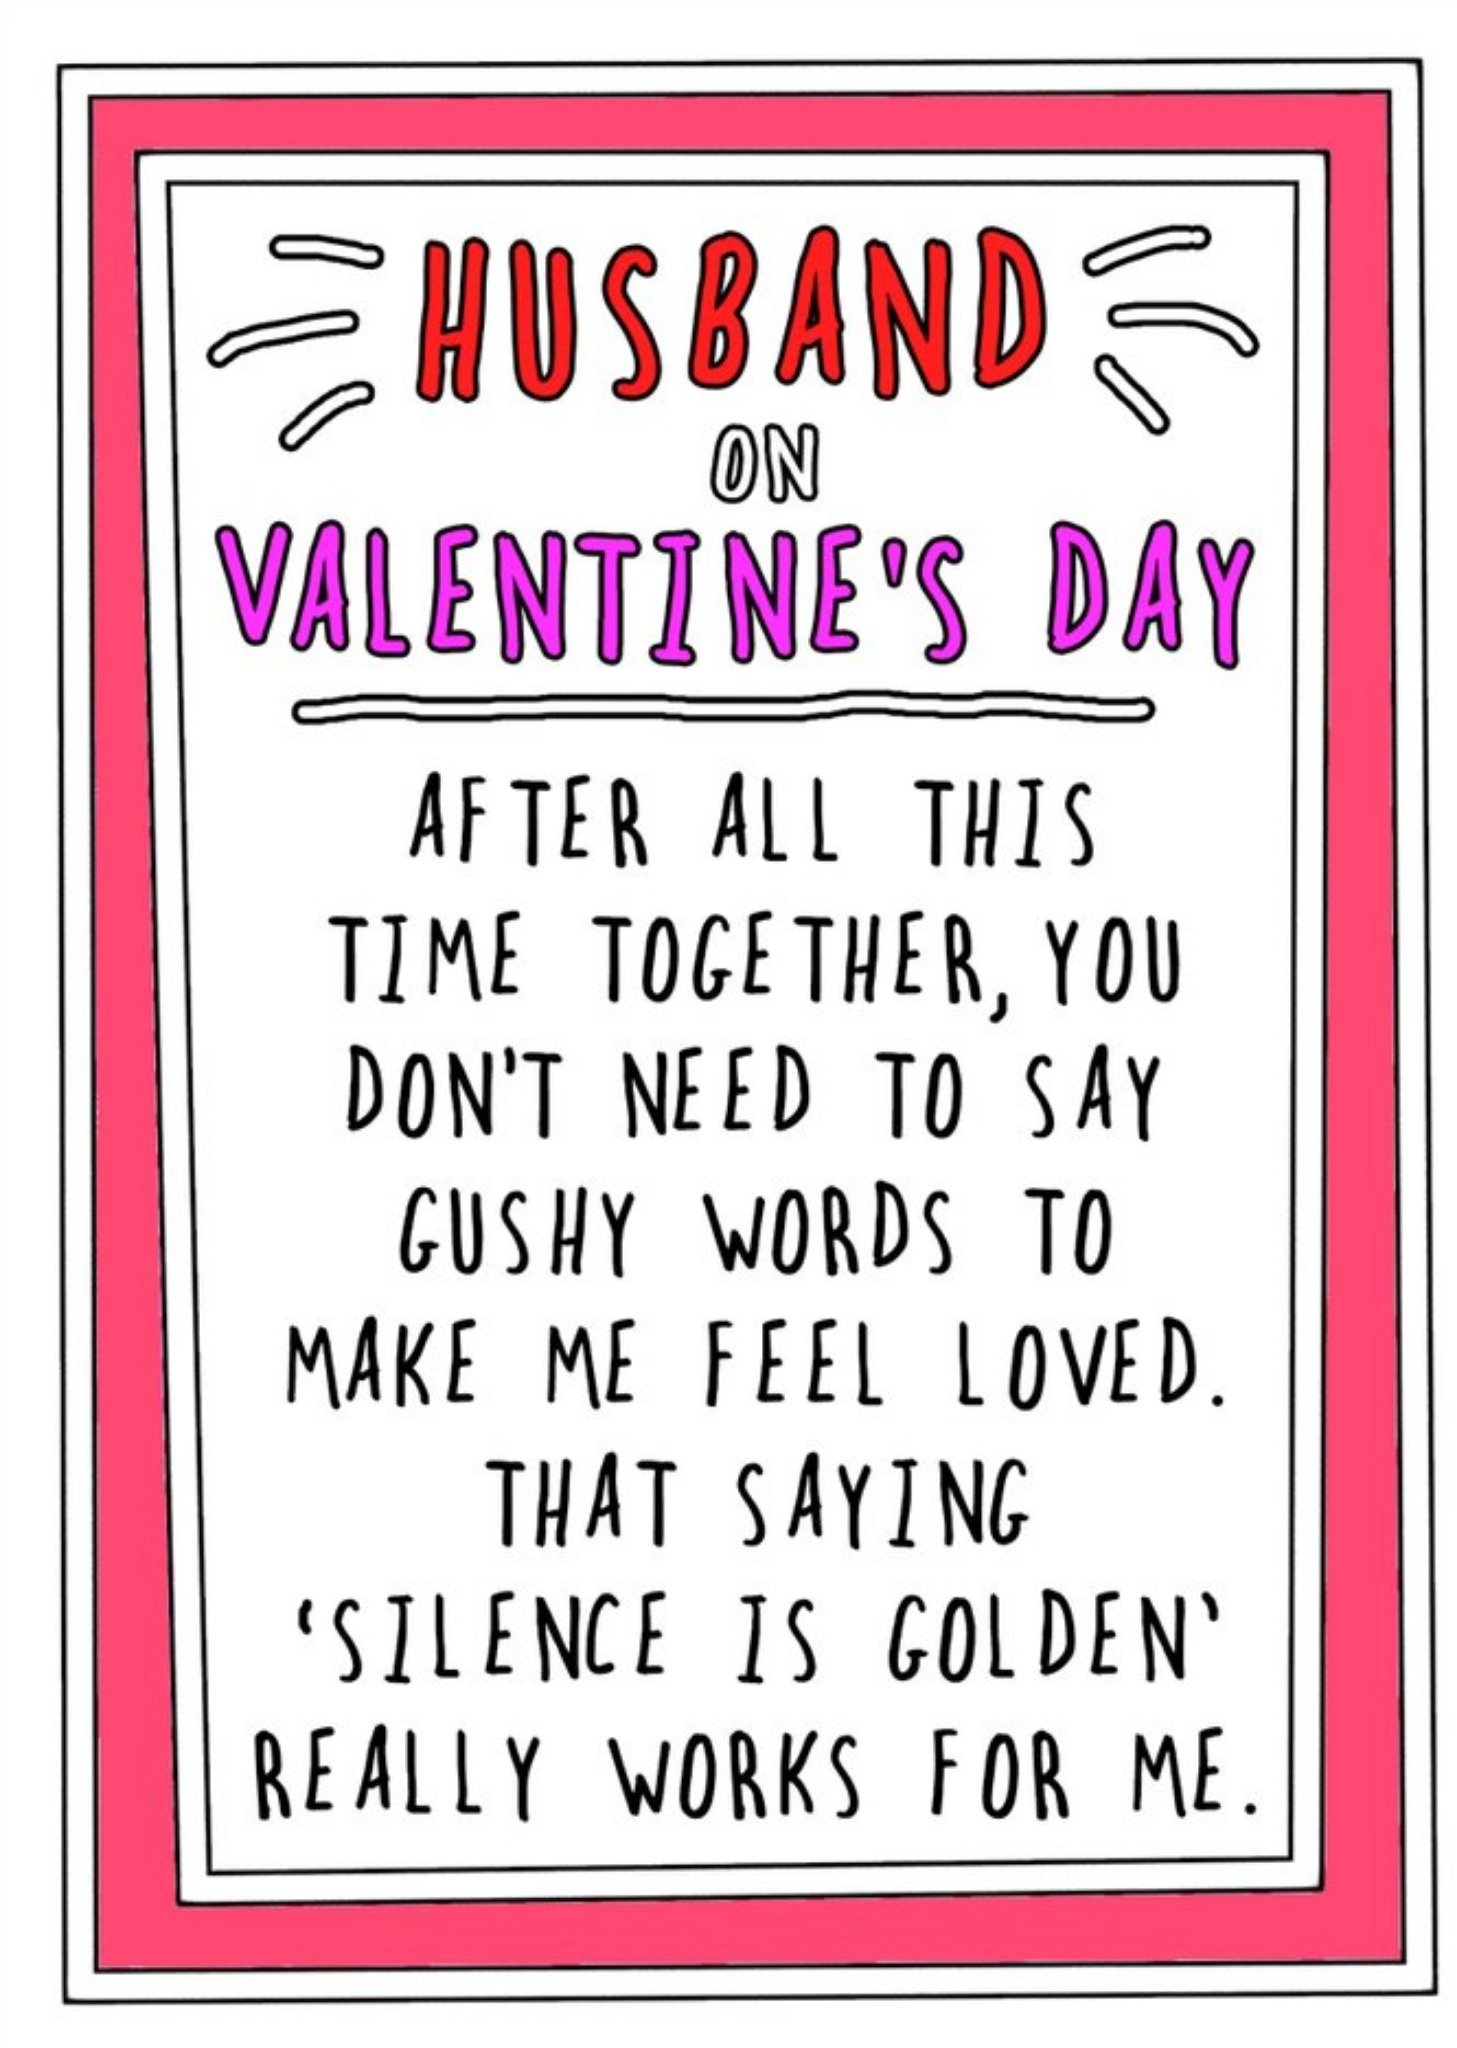 Go La La Silence Is Golden Funny Valentine's Card, Large